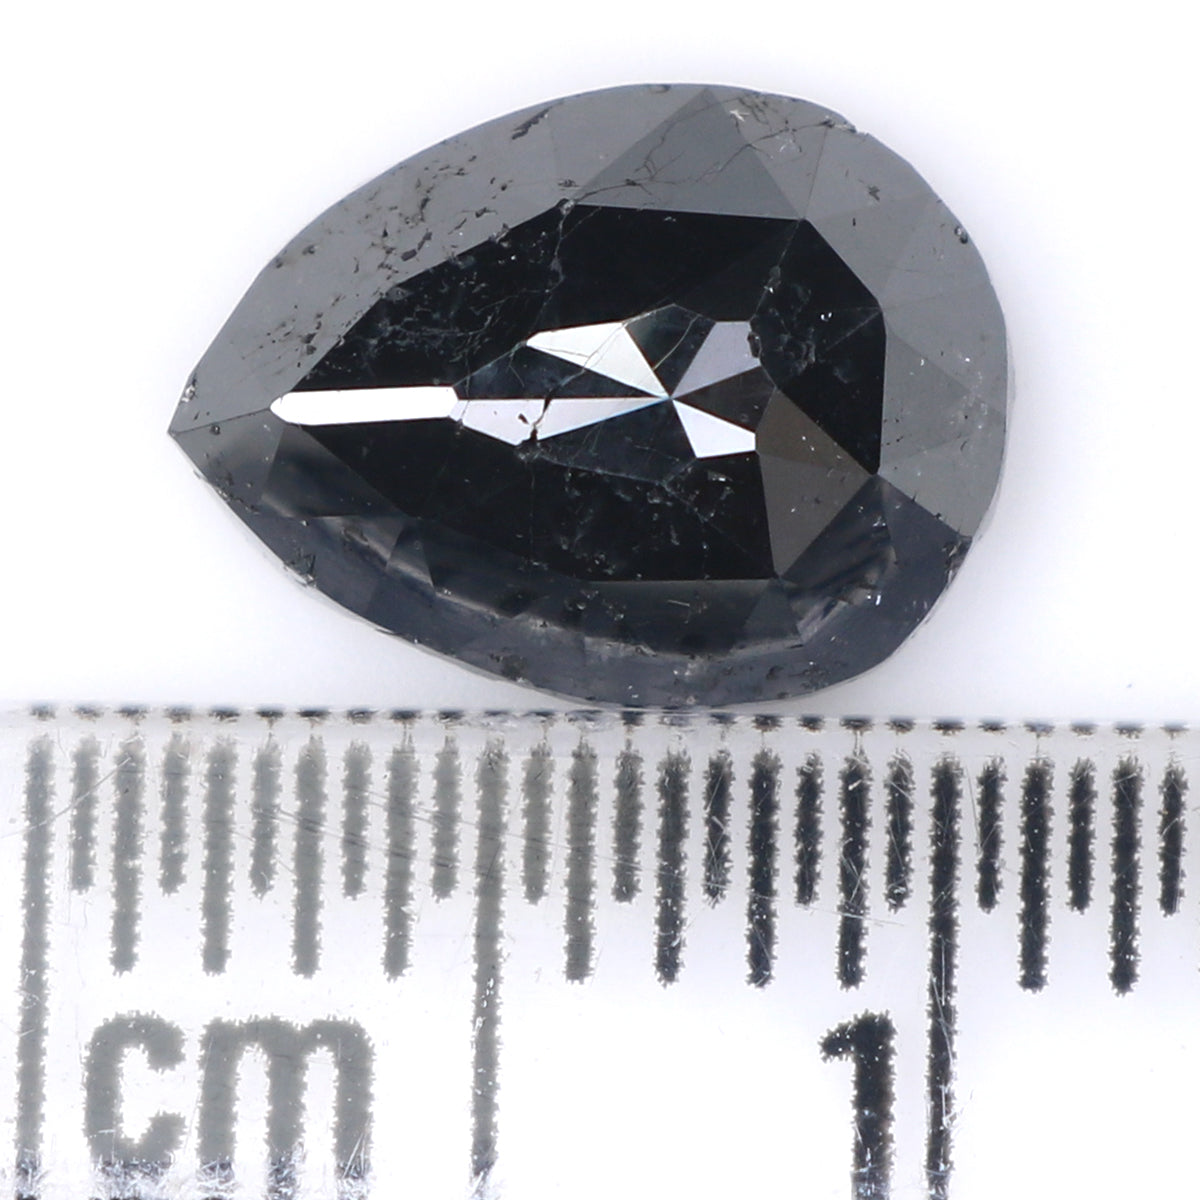 Natural Loose Pear Diamond Black Color 2.14 CT 9.25 MM Pear Shape Rose Cut Diamond L1607